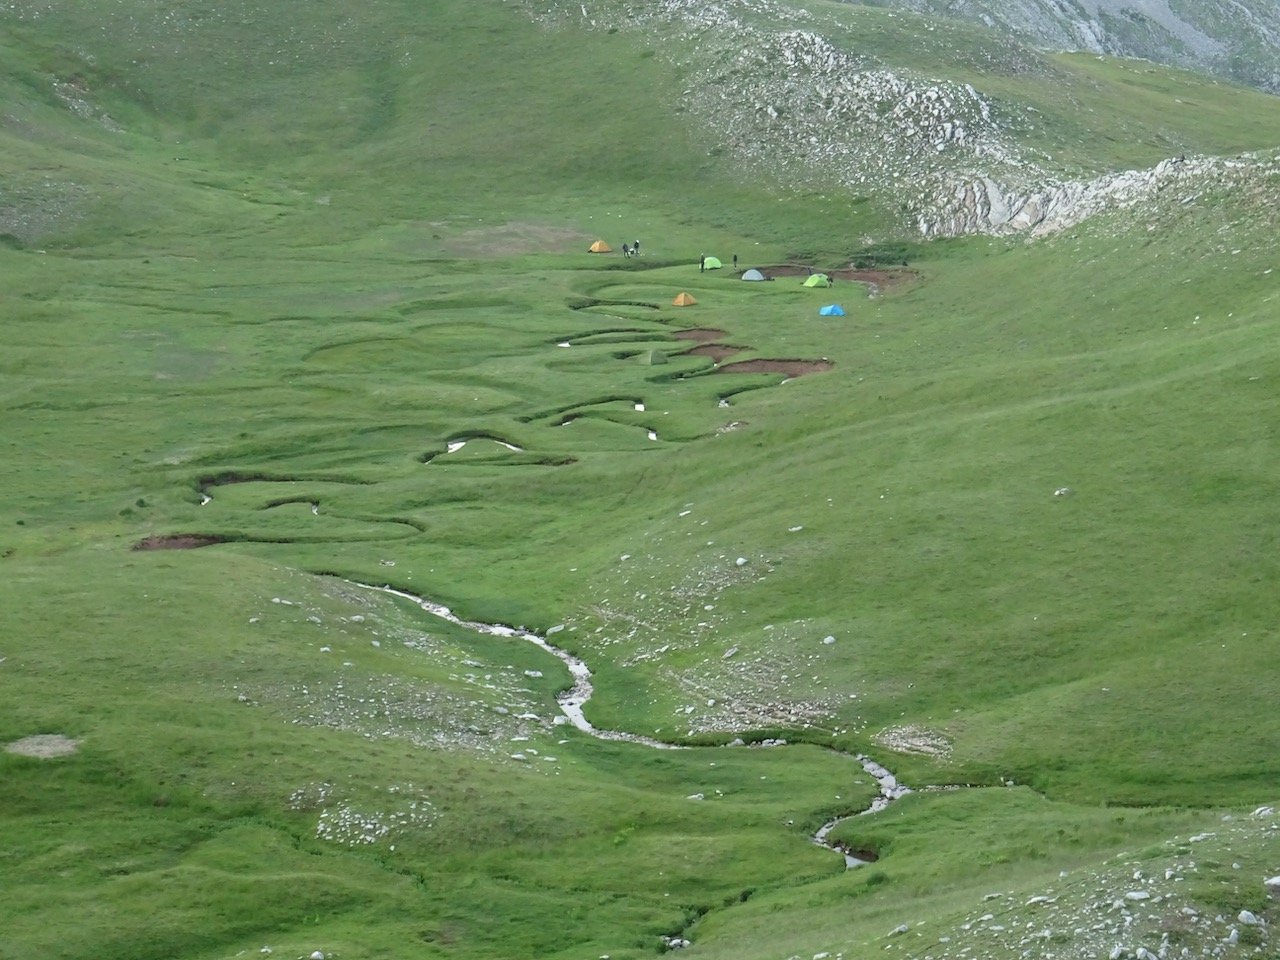 6day trekking / Tzoumerka - Kakarditsa - Peristeri mt. > 100km / Central Pindos